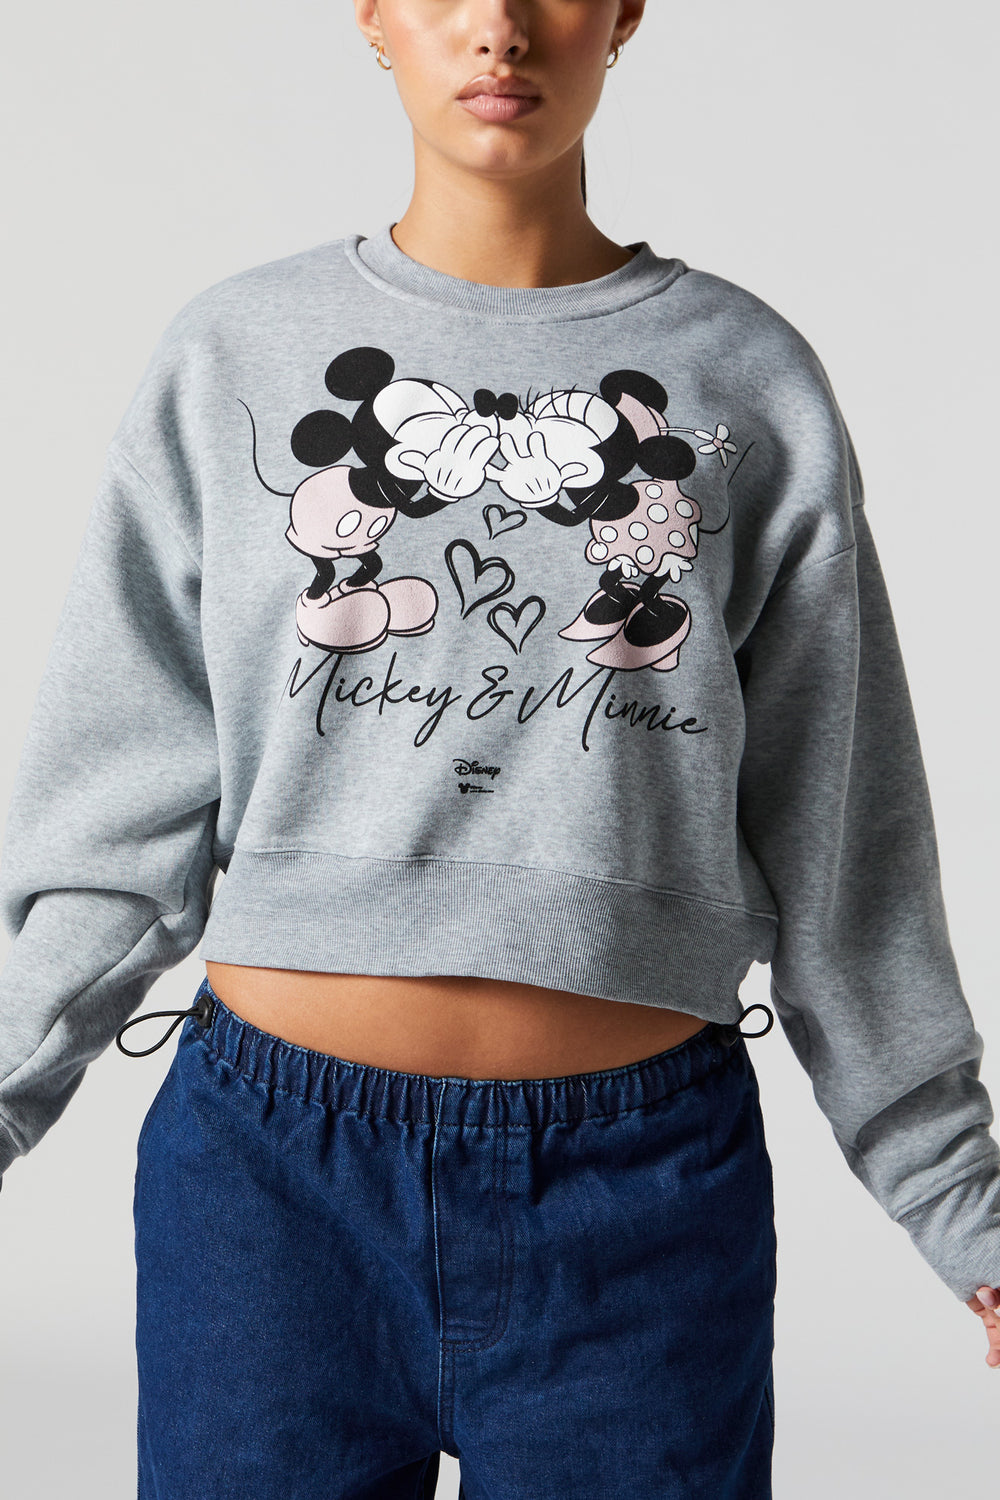 Mickey and Minnie Graphic Fleece Sweatshirt Mickey and Minnie Graphic Fleece Sweatshirt 2